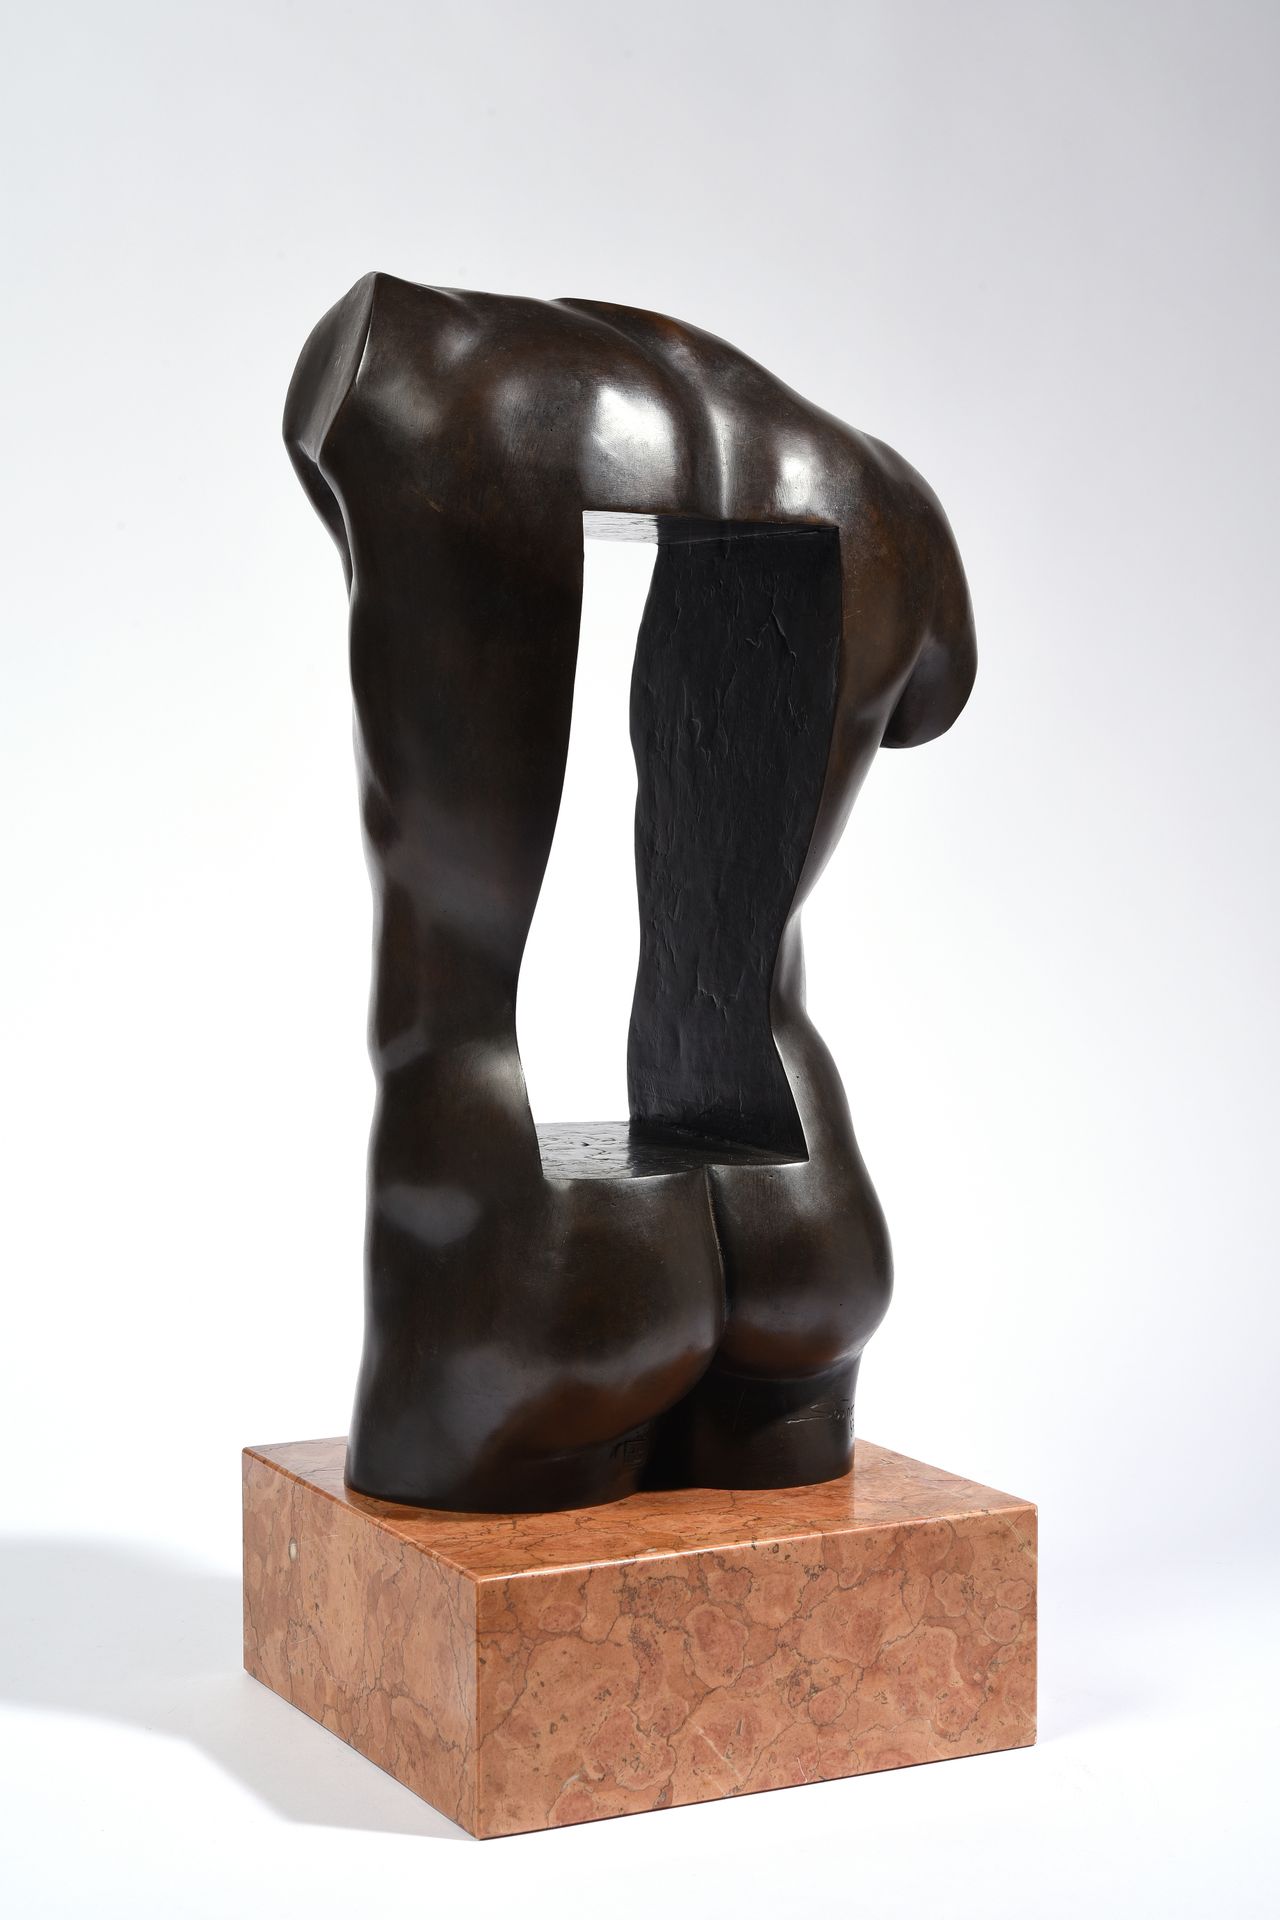 Null SACHA SOSNO (1937-2013)

Obliterated Man's Torso (Hermes), 1987

Bronze pri&hellip;